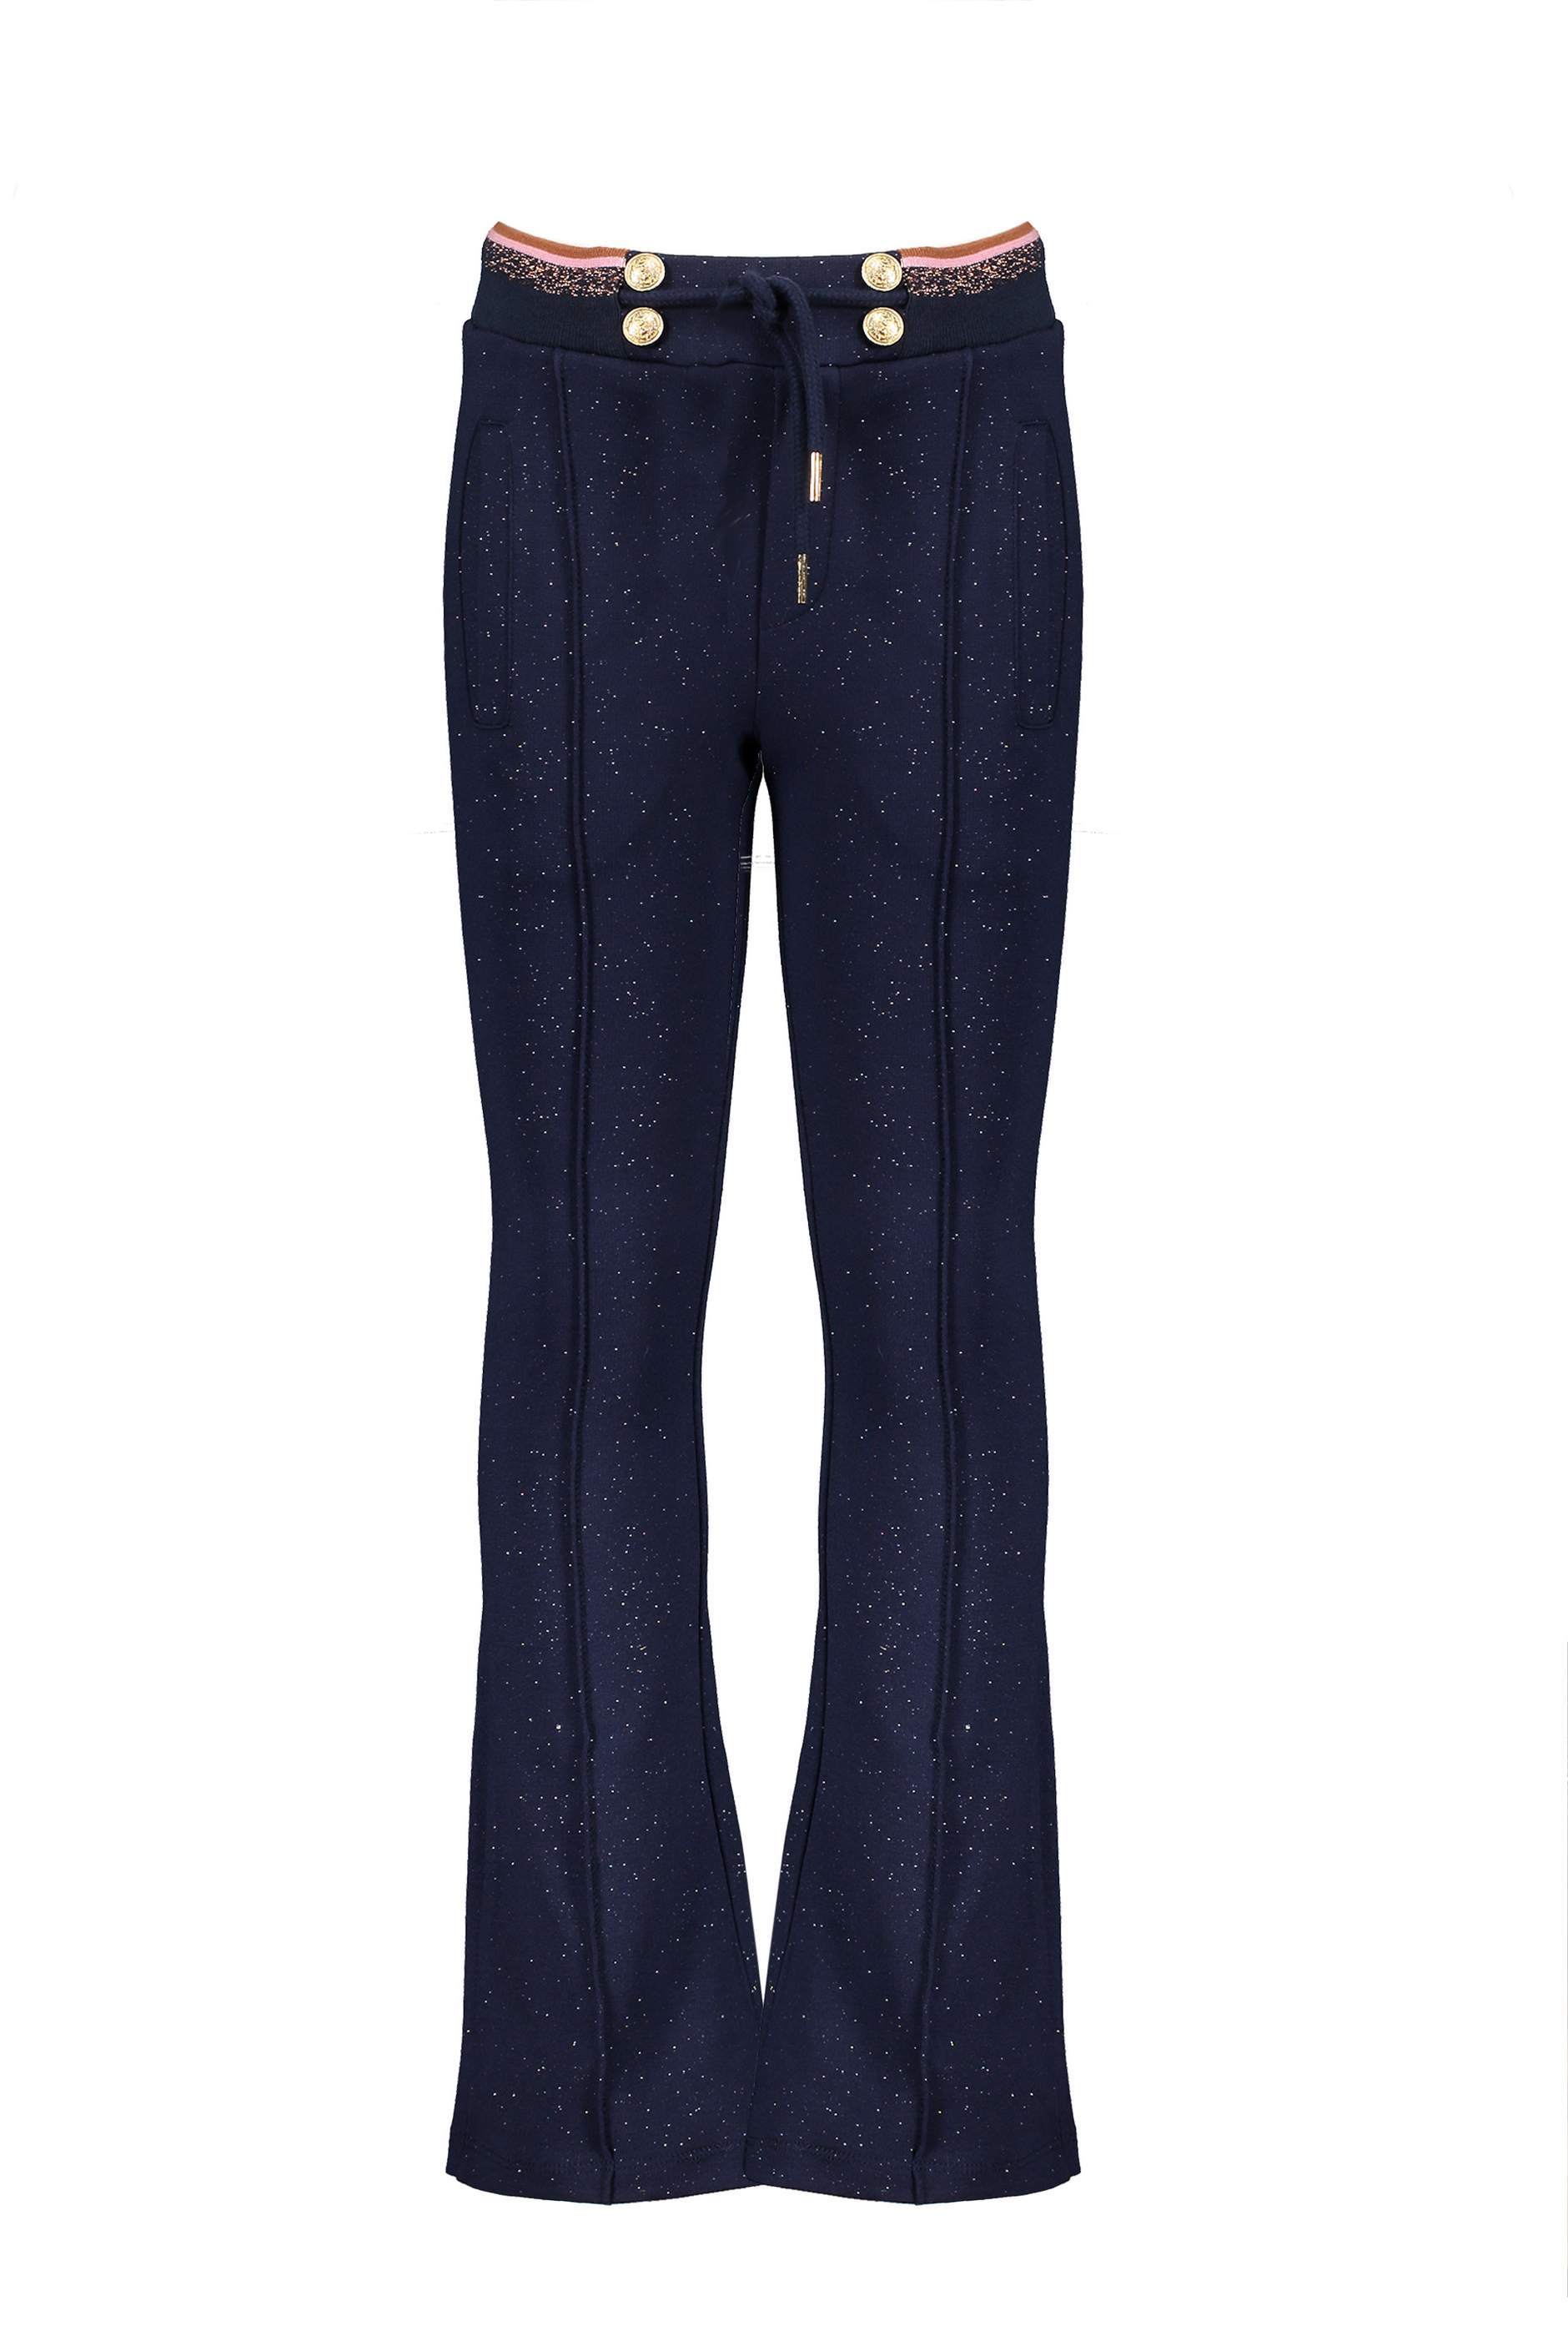 Meisjes Sahara flared pants with fancy rib and cord on waistband van NoNo in de kleur Navy Blazer in maat 146/152.